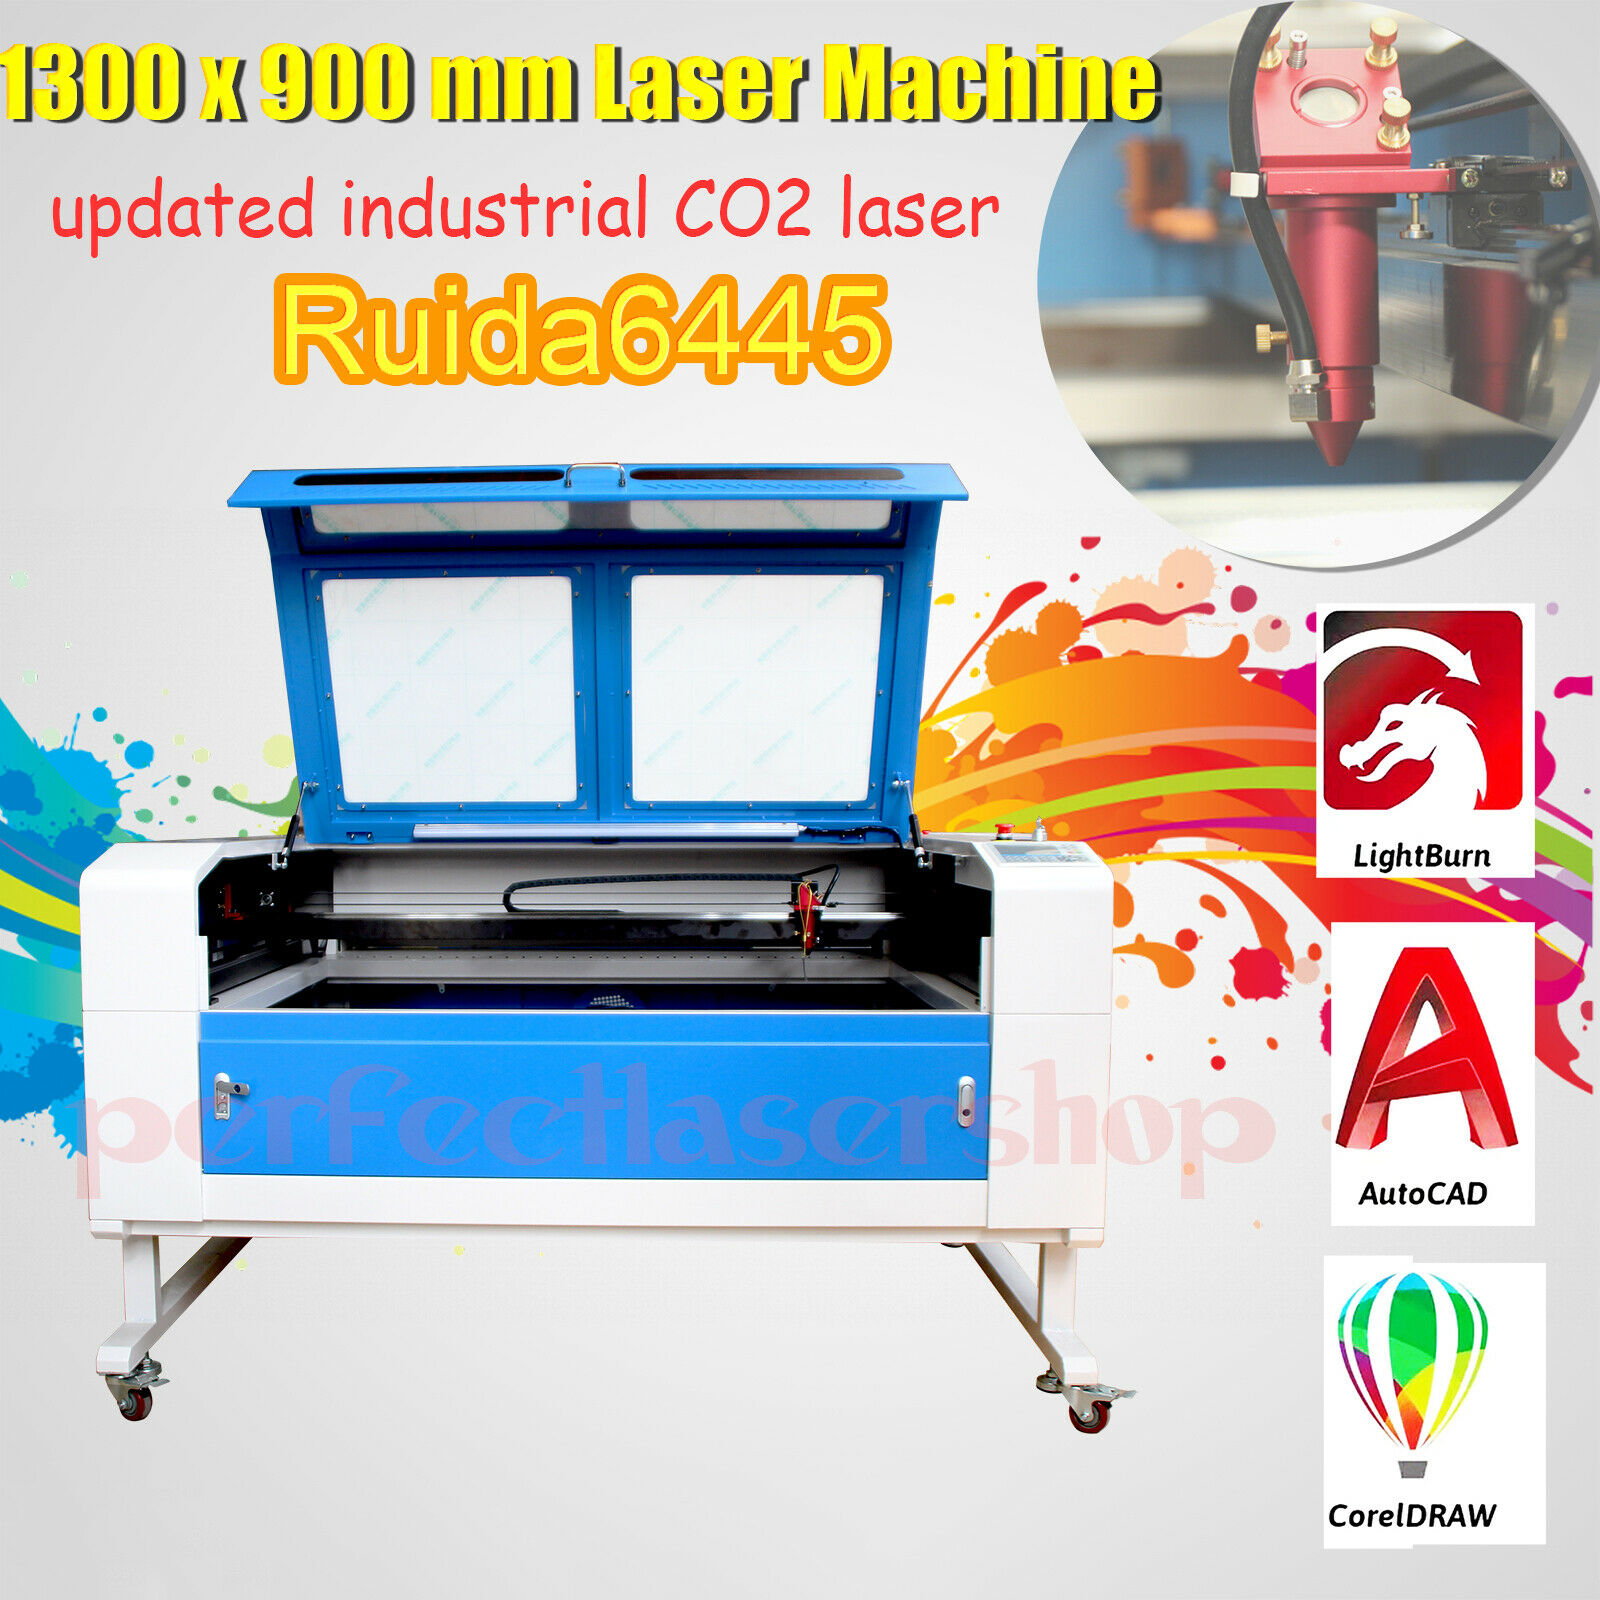 Weiju130W CO2 Laser Cutting Machine 1300*900 mm RUIDA Rotary CW-5000 Chiller